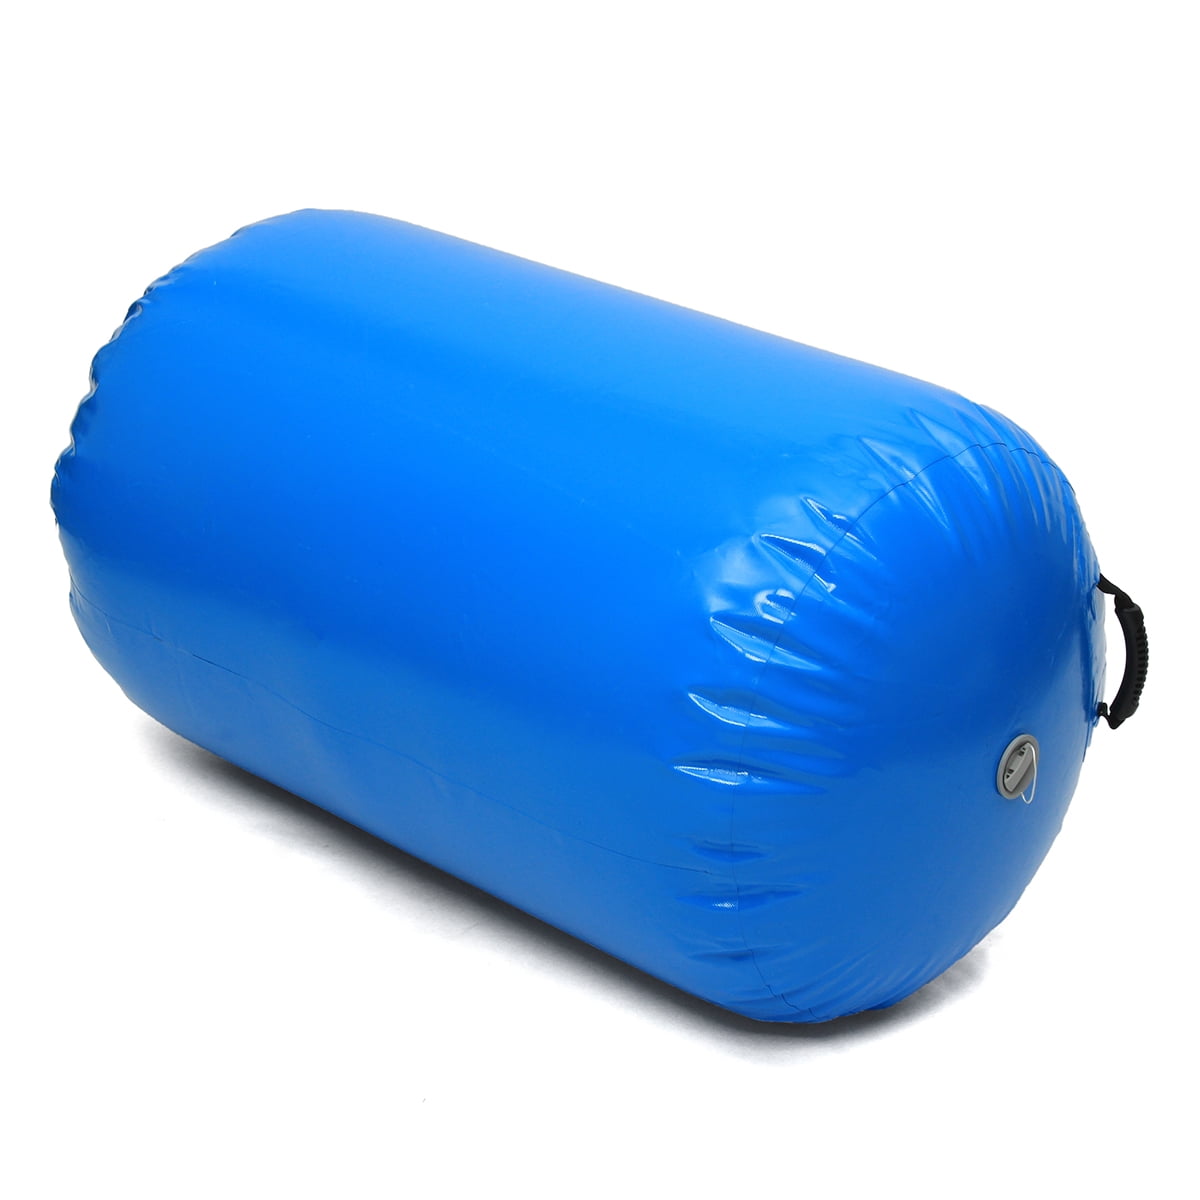 AKSPORT Gymnastics Inflatable Air Spot/Air Roller/Air Barrel/Air Block/Air Mat Set 